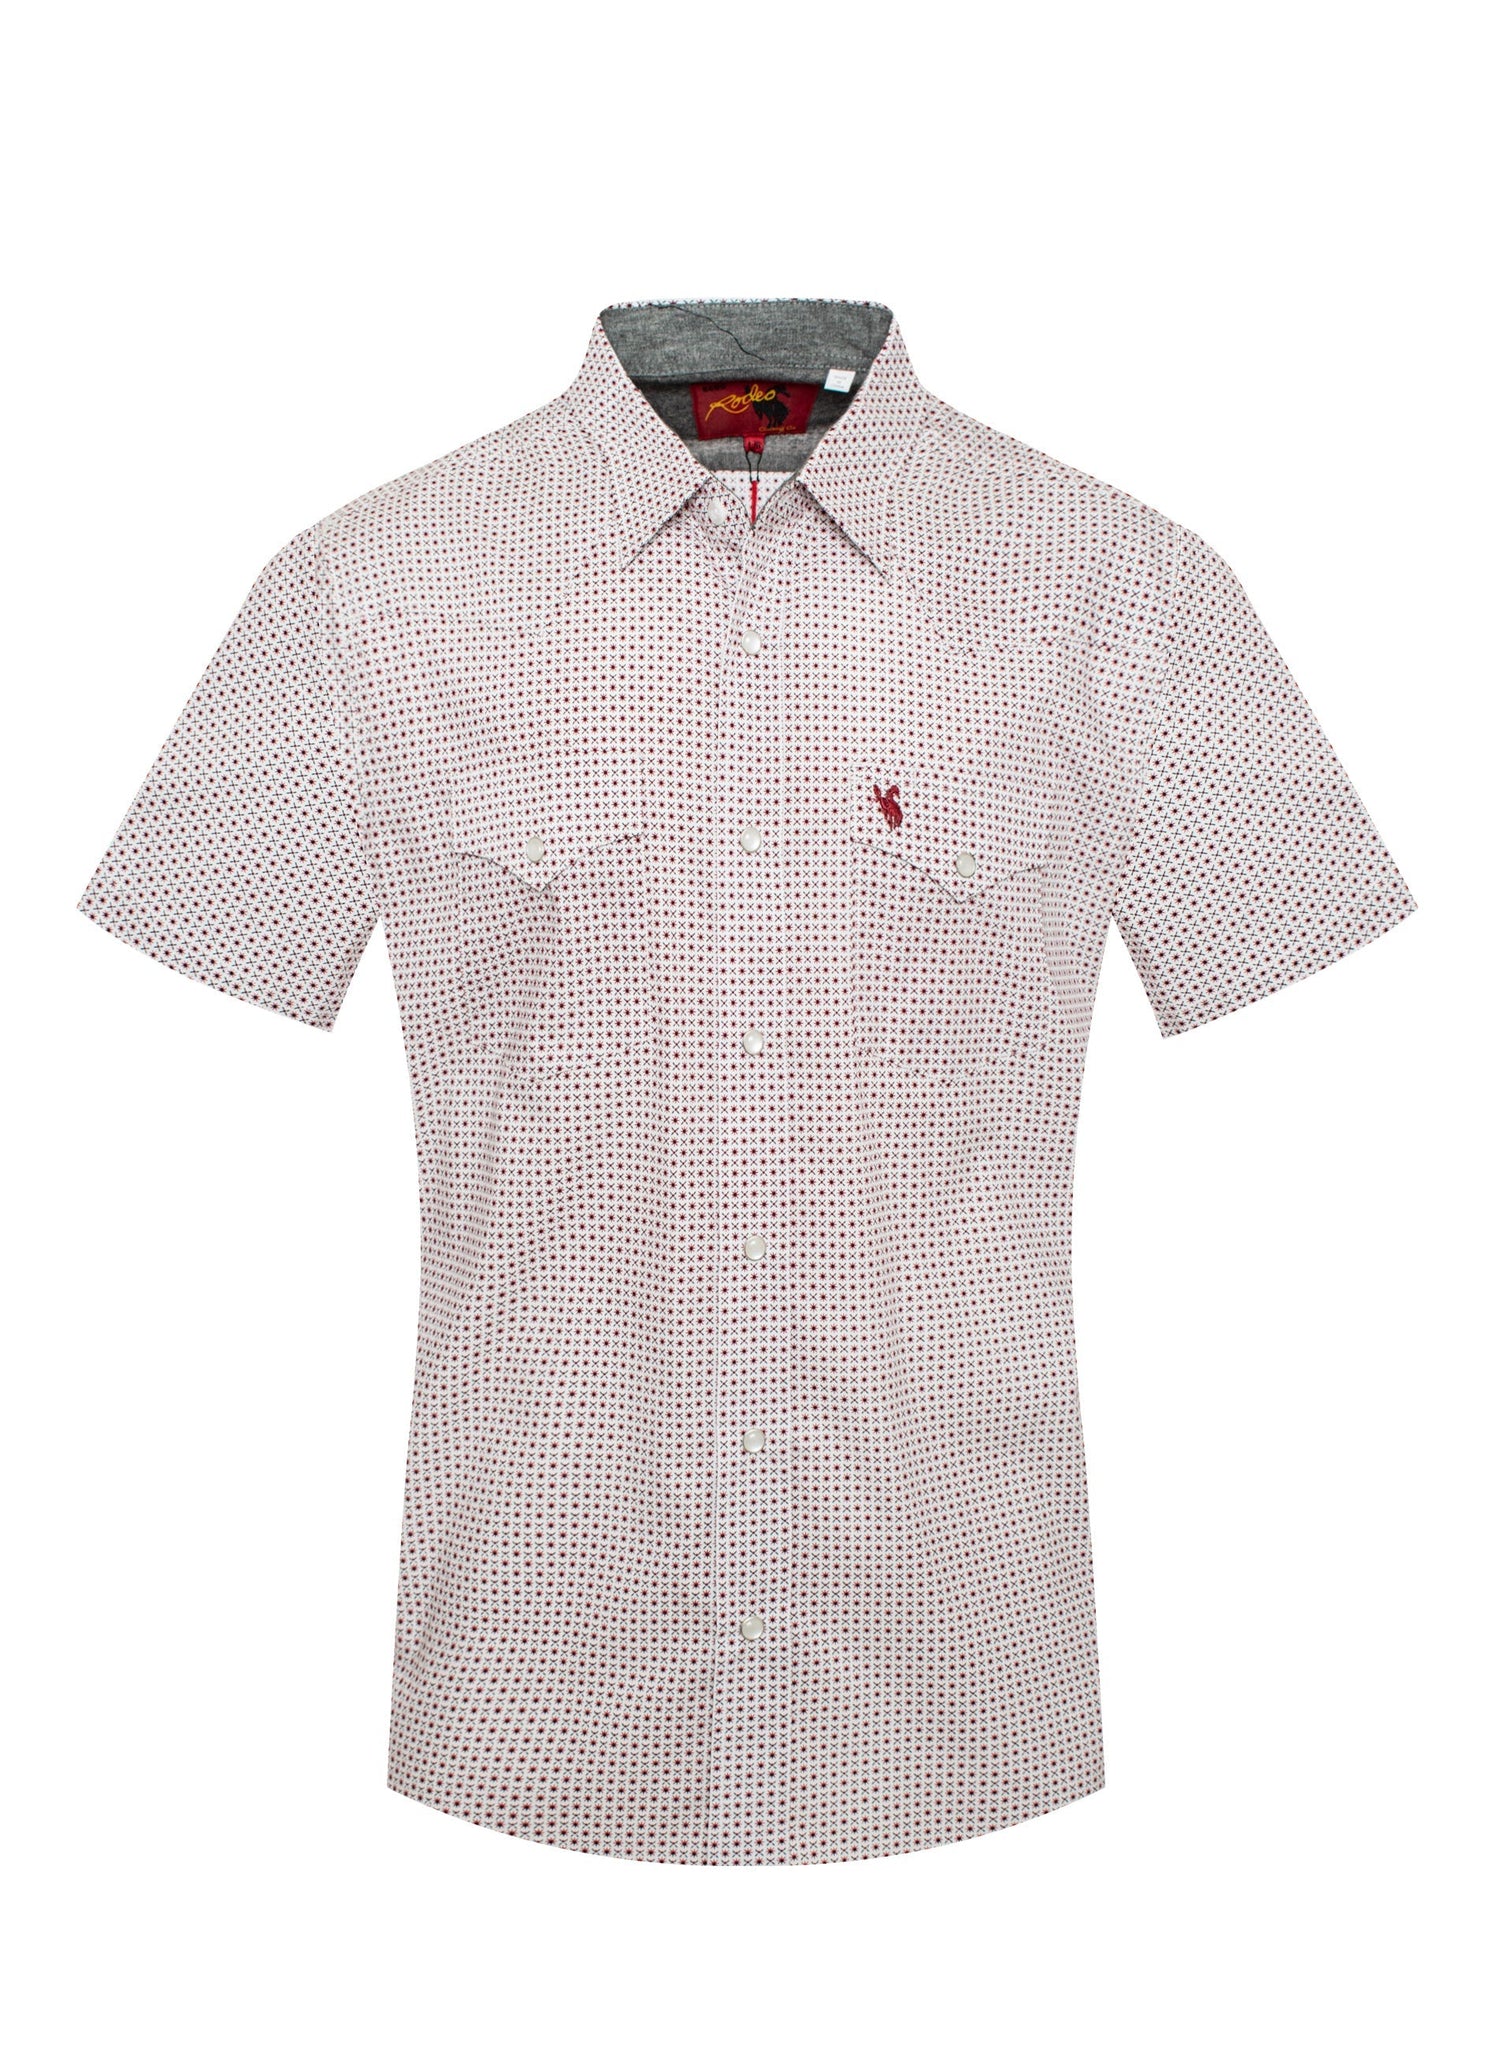 Men's Short Sleeve Pearl Snap Print Shirt -PS100S-133